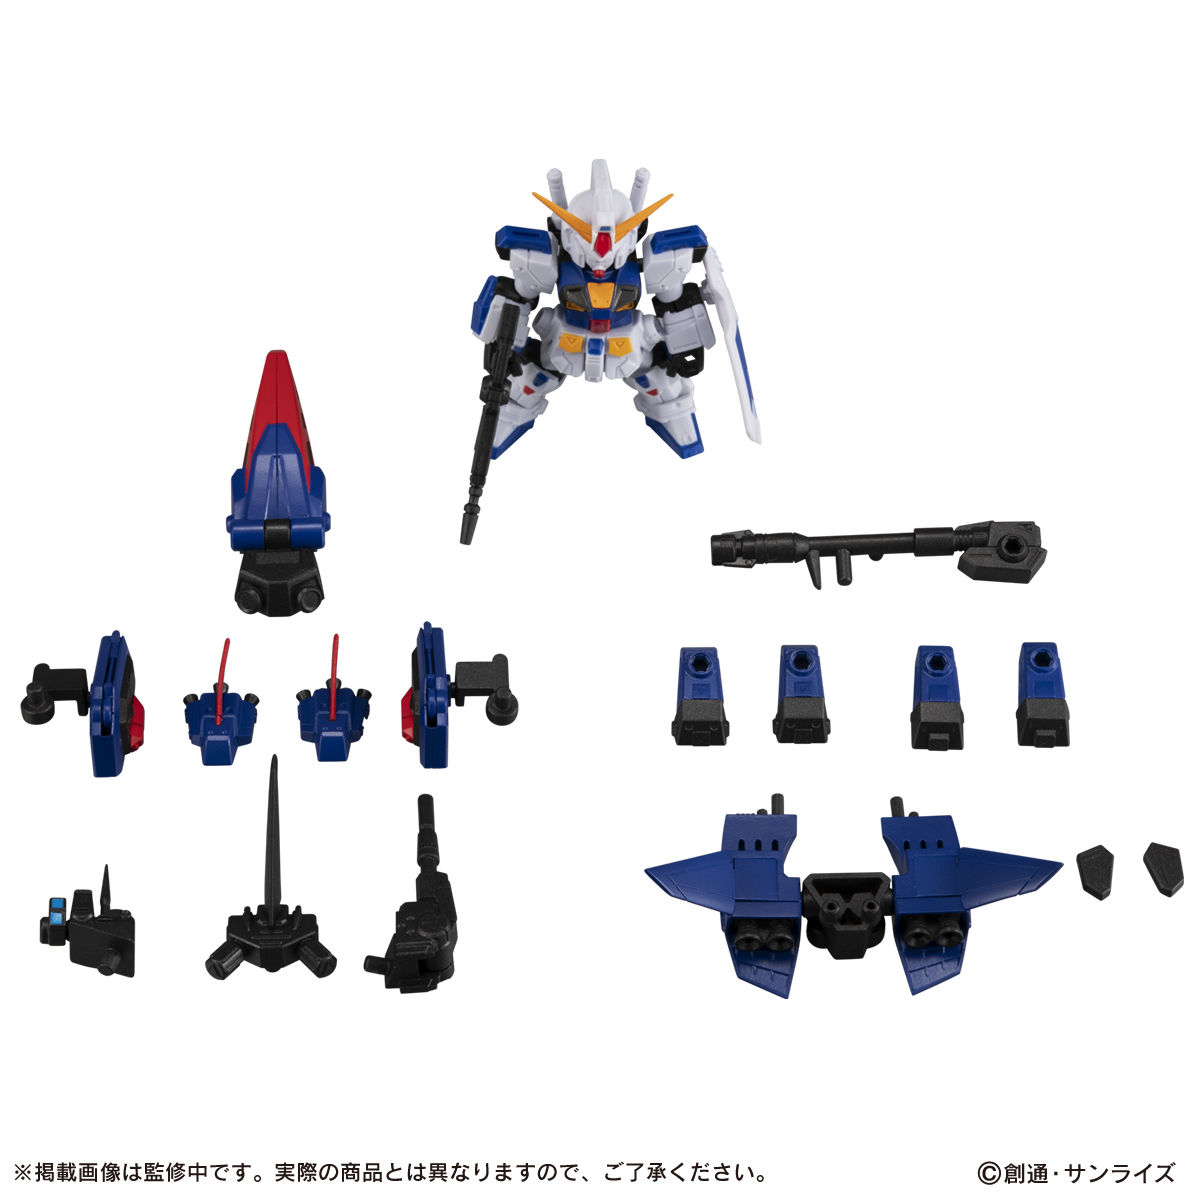 Gashapon Gundam Series: Gundam Mobile Suit Ensemble EX24 F90A Gundam F90 Assoult Type + F90P Plunge Type